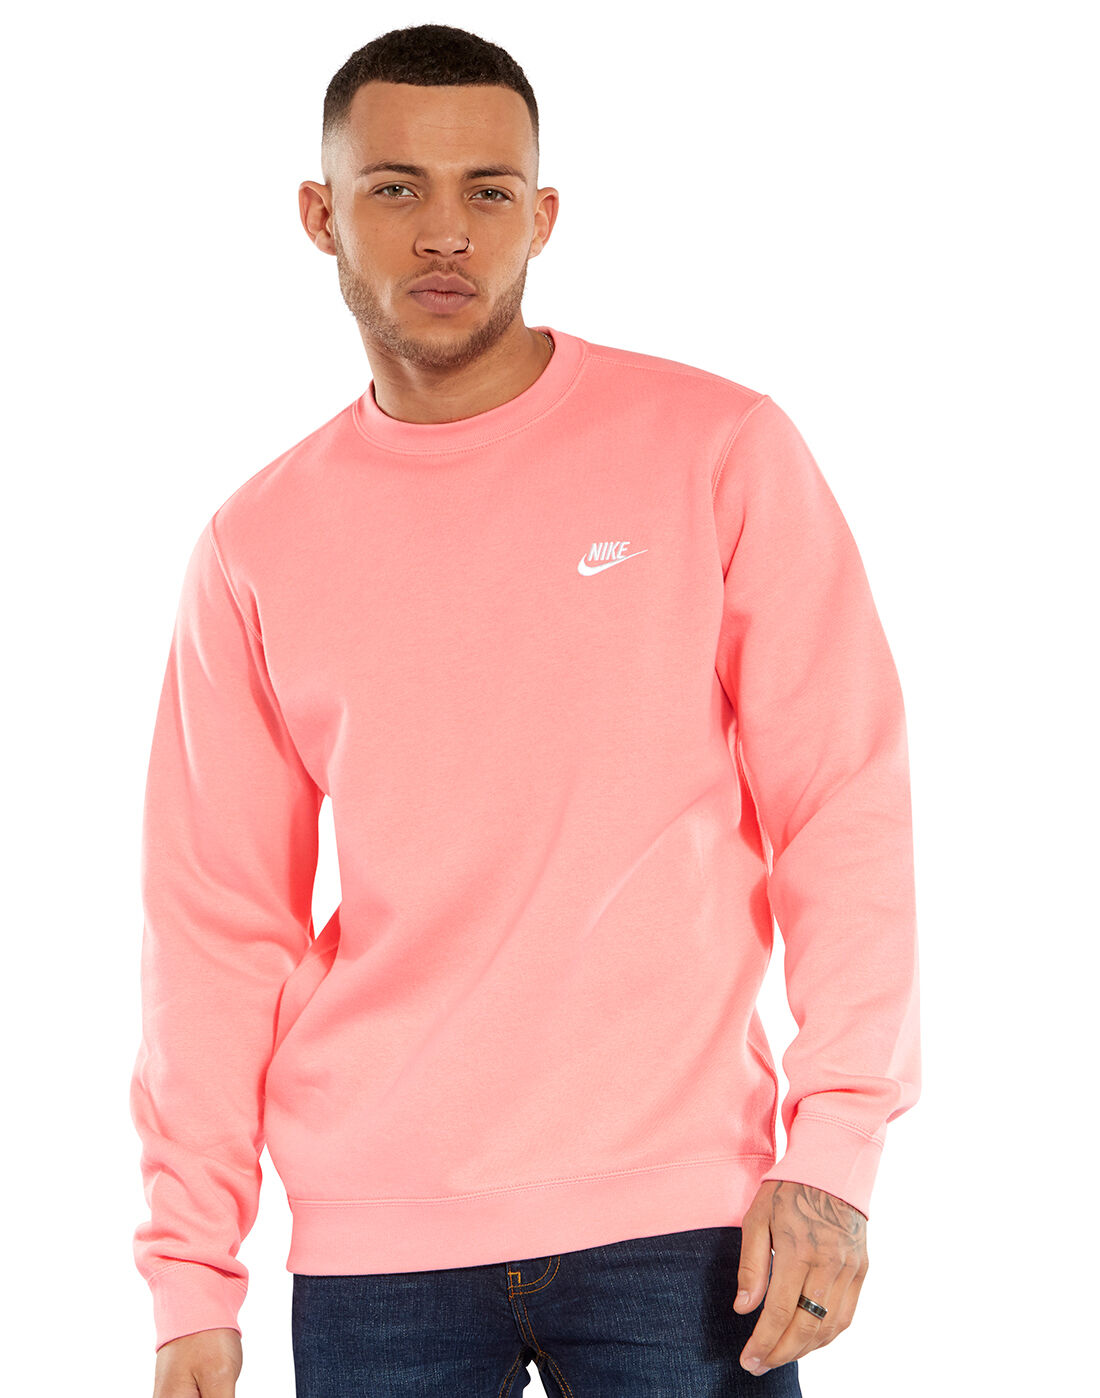 hot pink nike sweatshirt